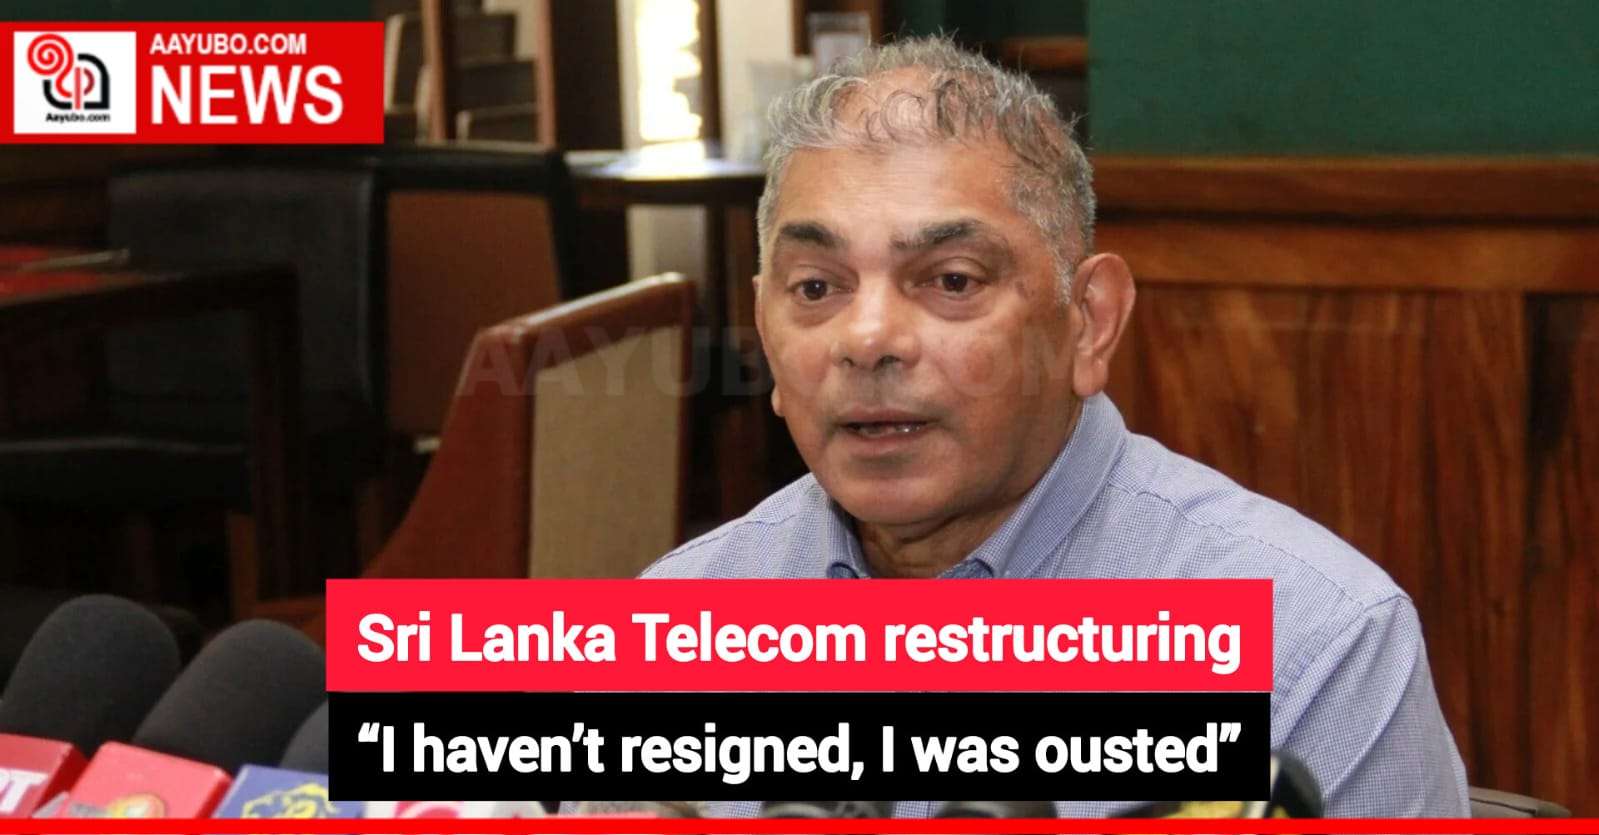 Sri Lanka Telecom restructuring